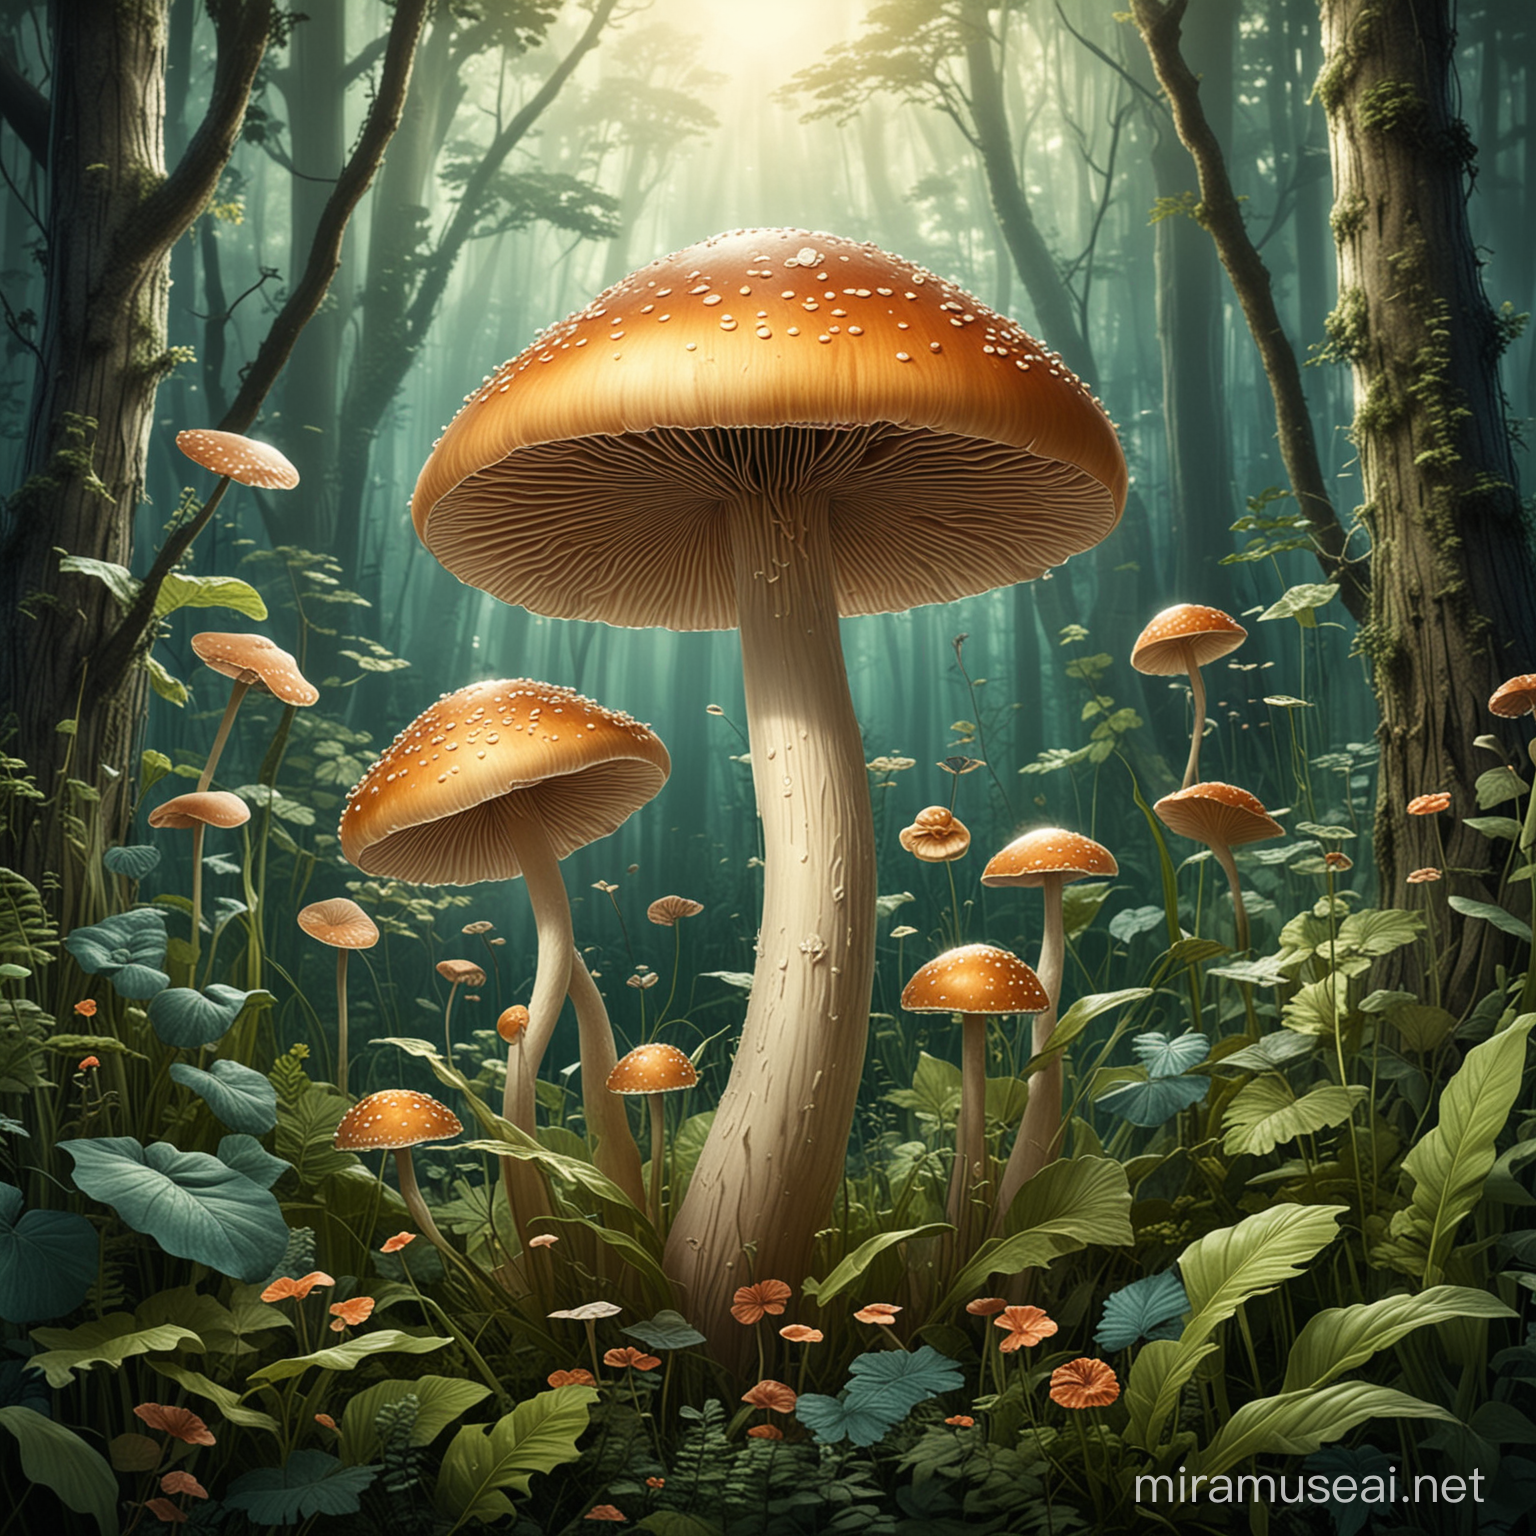 Elegant Art Deco Magical Mushroom amidst Lush Vegetation